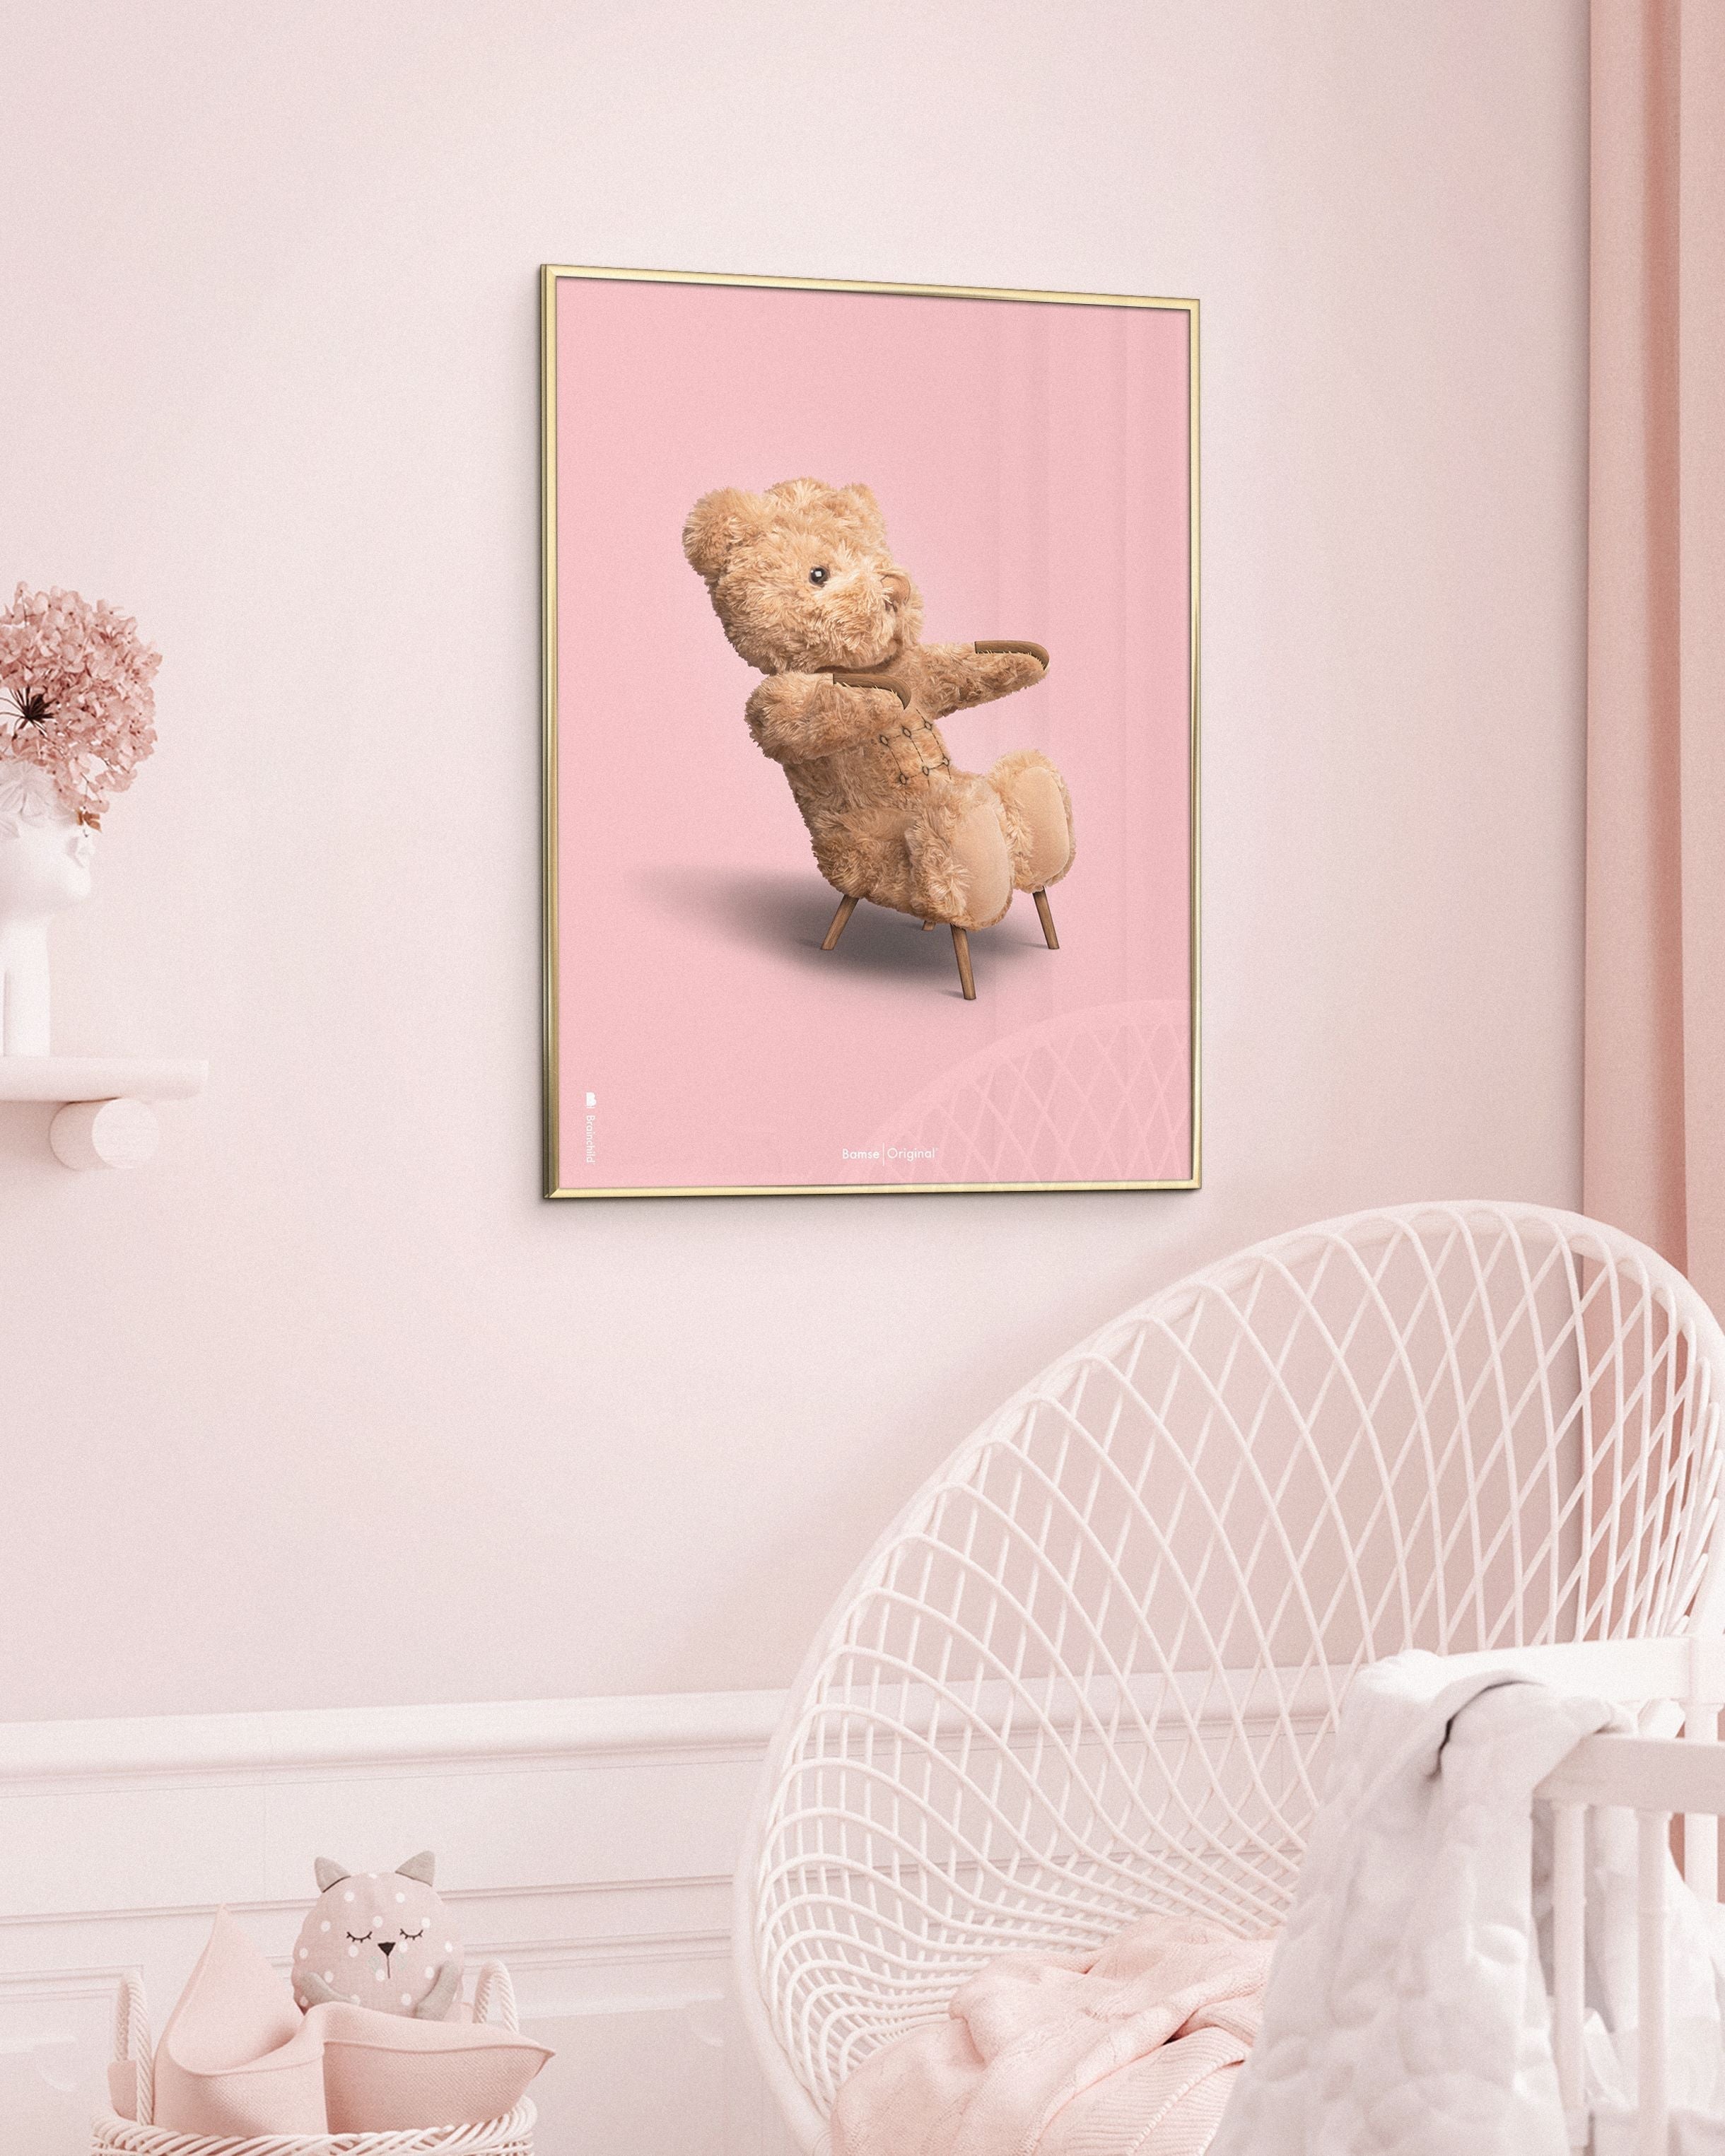 Brainchild Teddy Bear Classic Poster Frame Made Of Dark Wood Ram 50x70 Cm, Pink Background